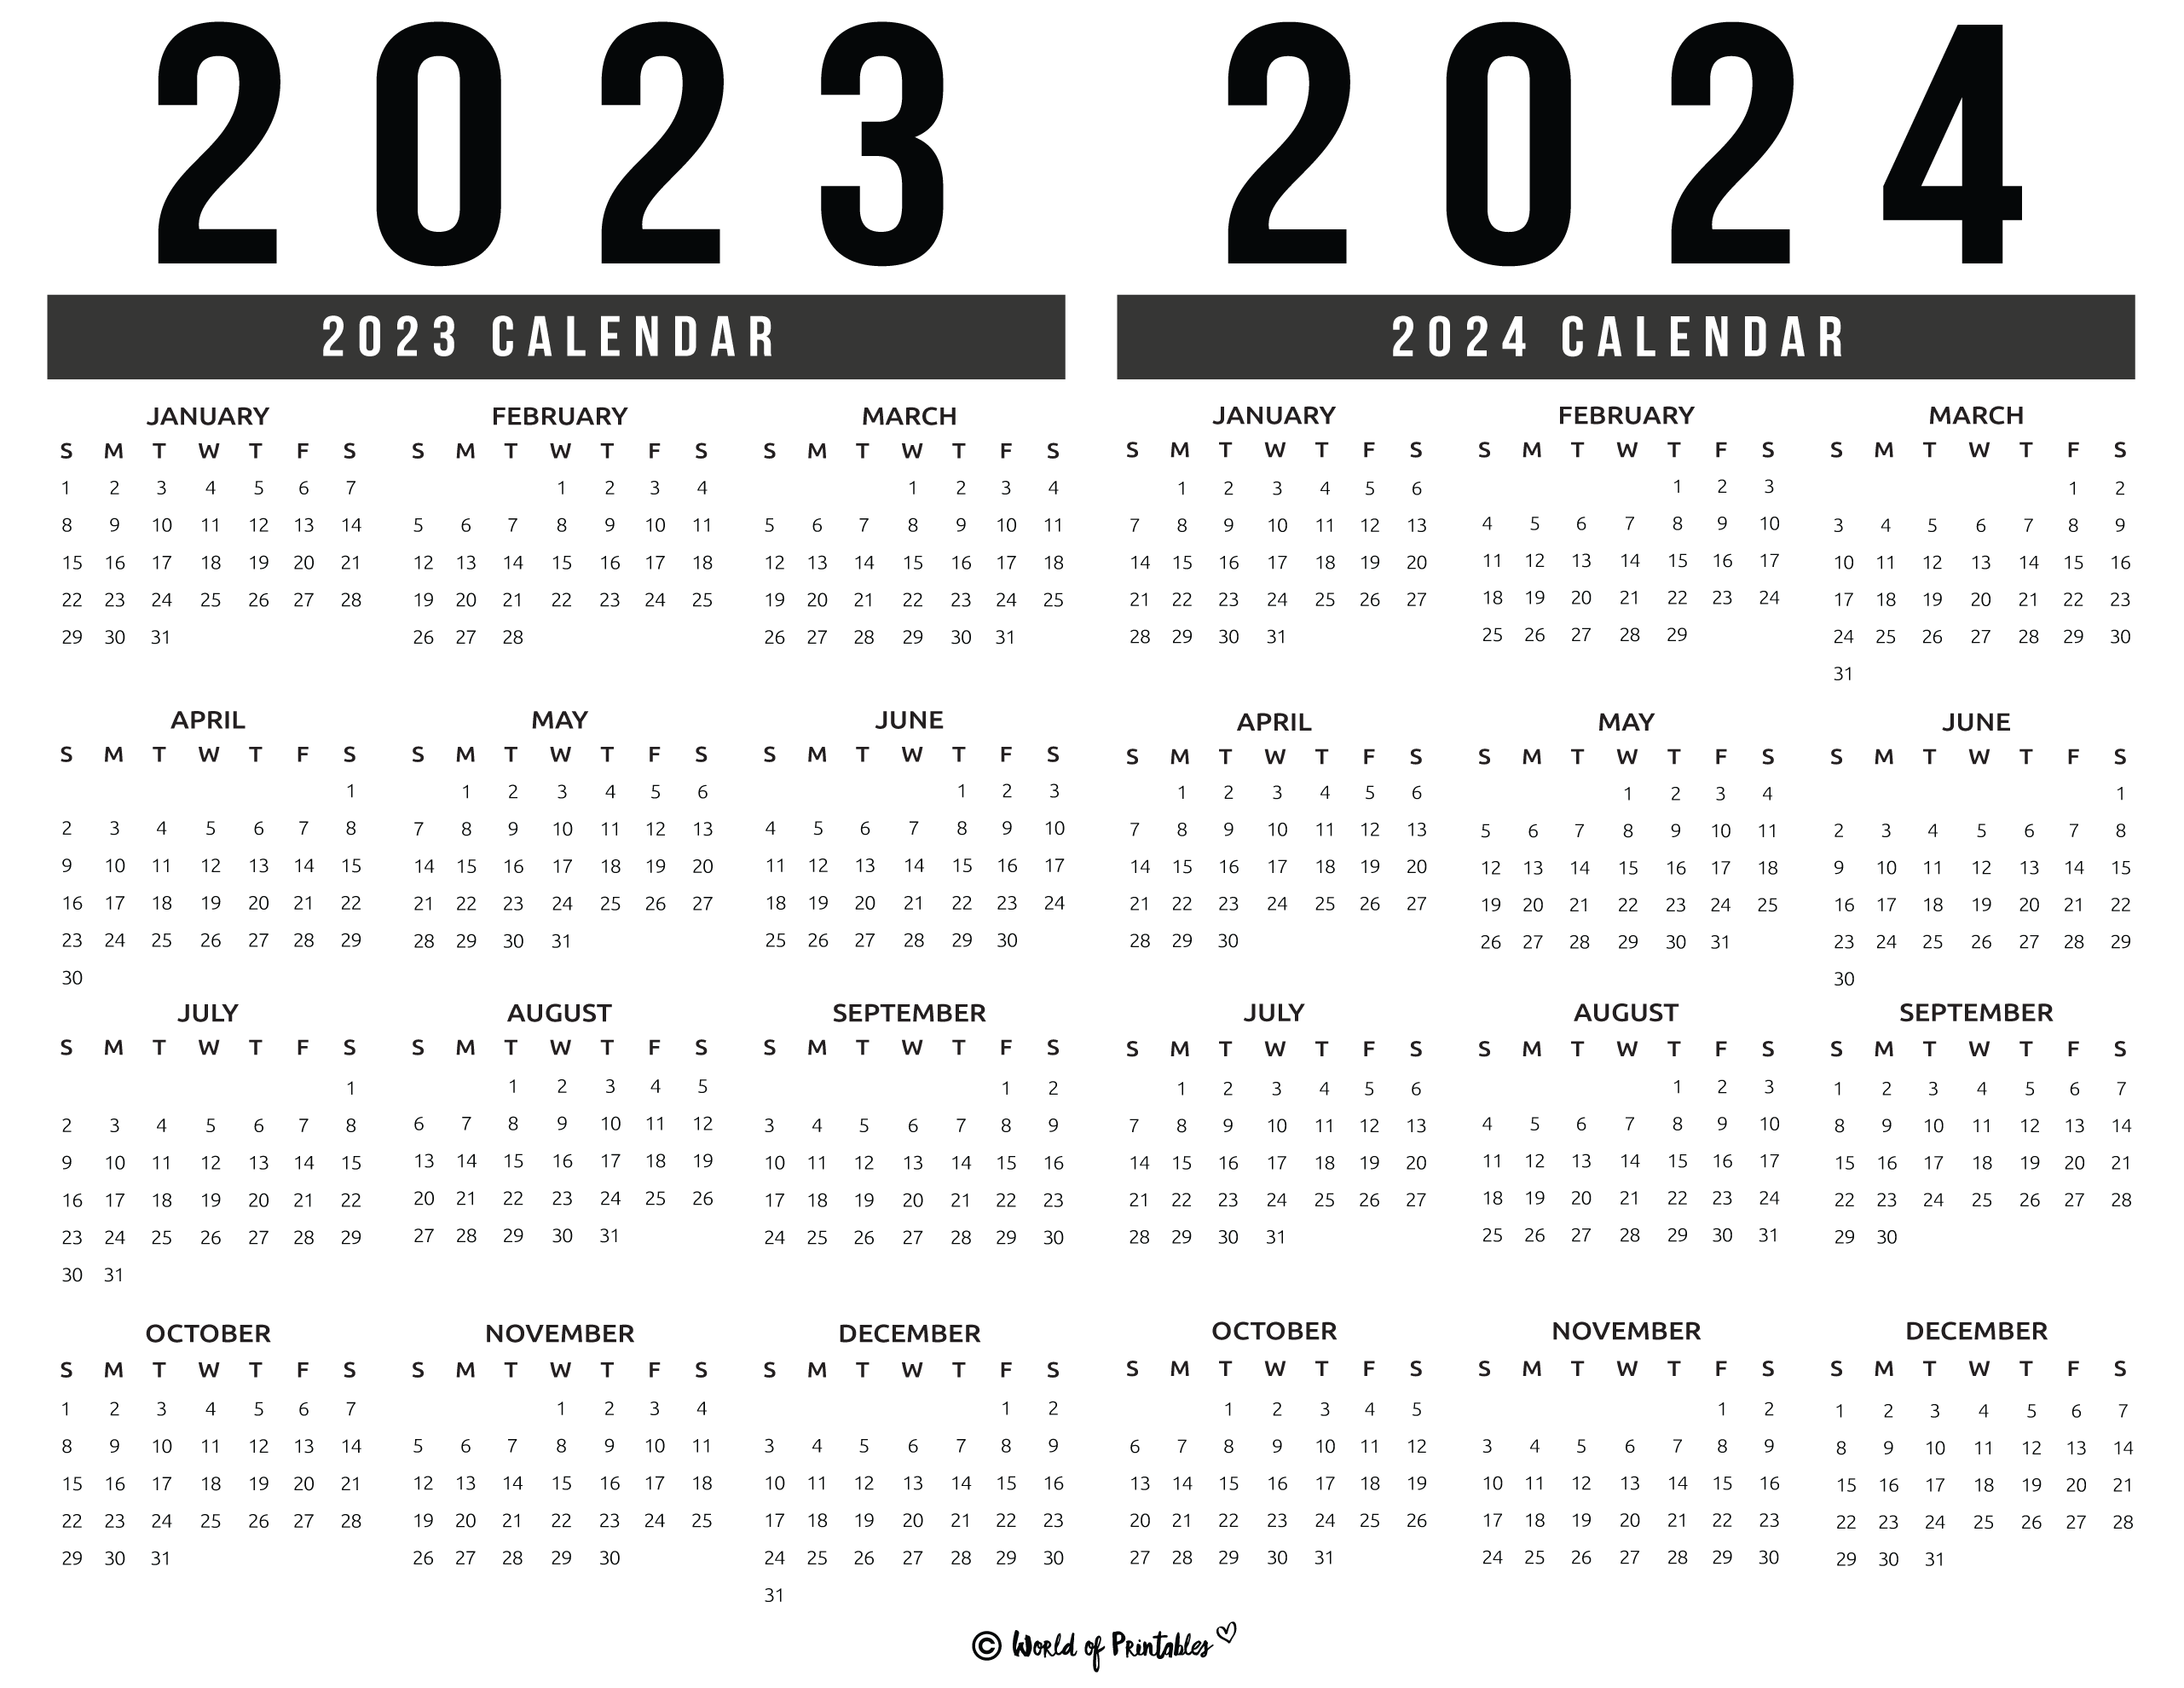 2023 2024 Calendar Free Printables - World Of Printables for 2023 And 2024 Monthly Calendar Printable